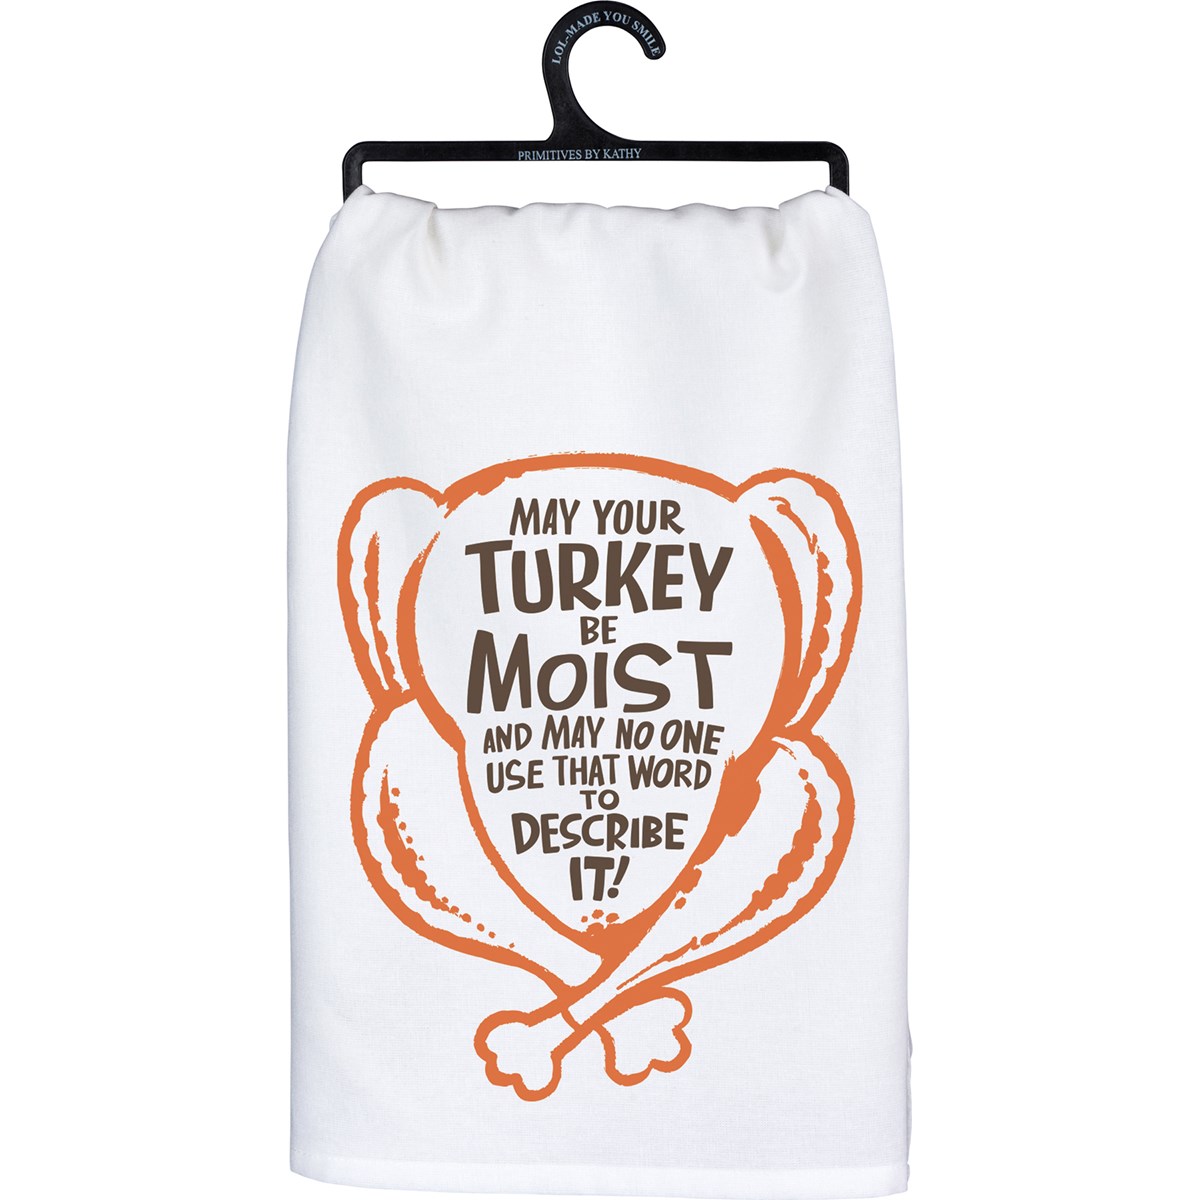 May Turkey Be Moist Describe It Kitchen Towel - Cotton